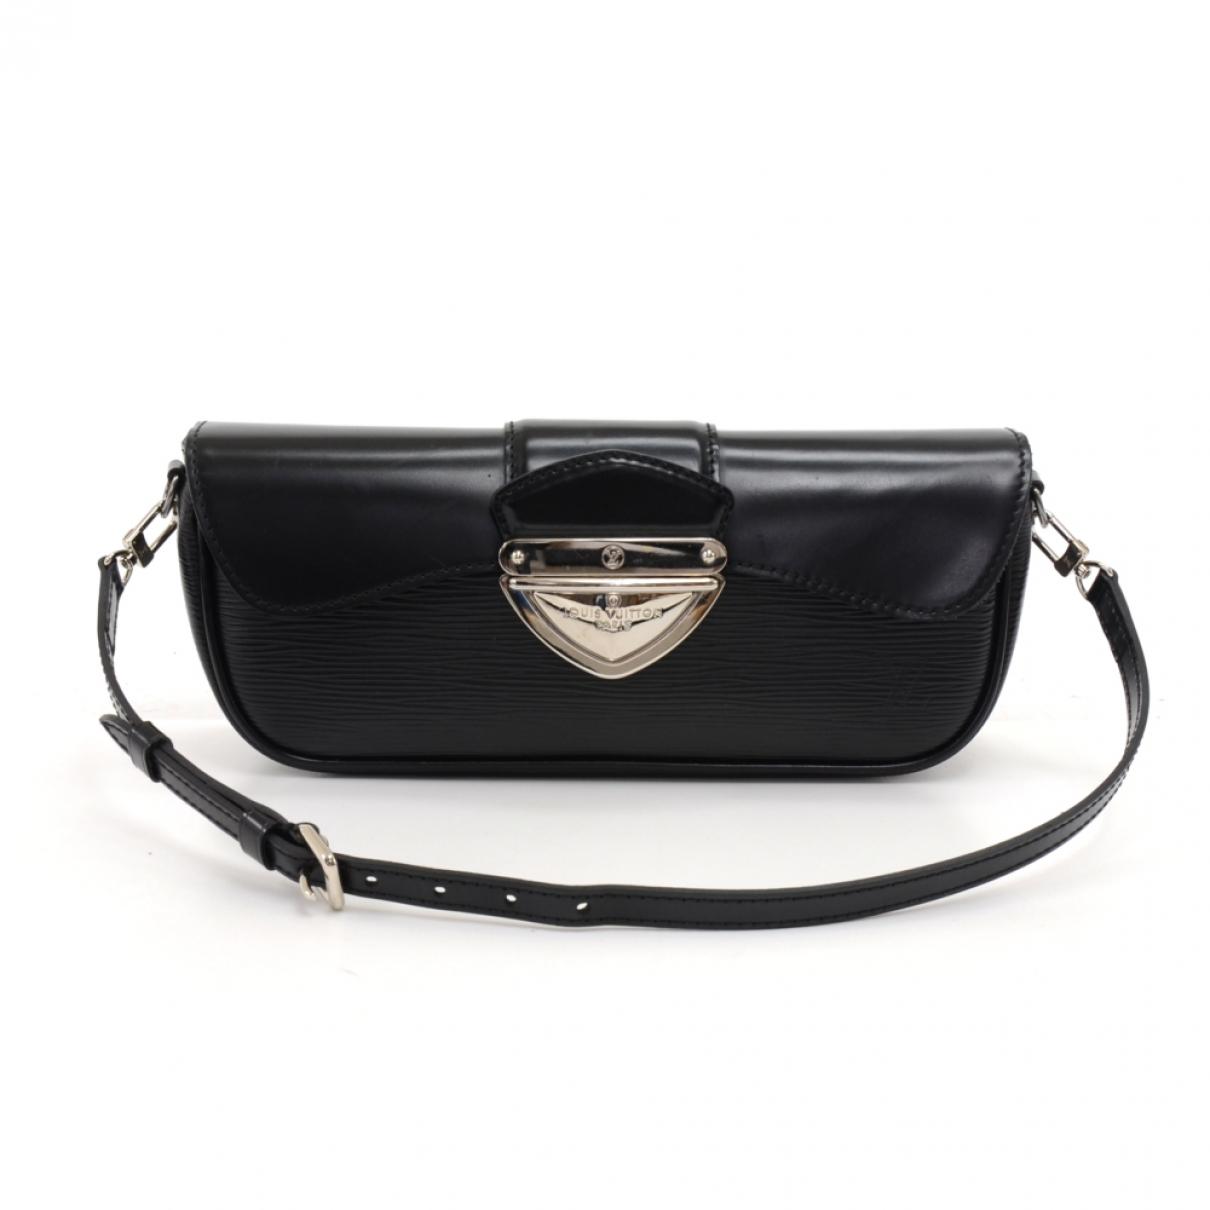 Lyst - Louis Vuitton Vintage Montaigne Black Leather Handbag in Black